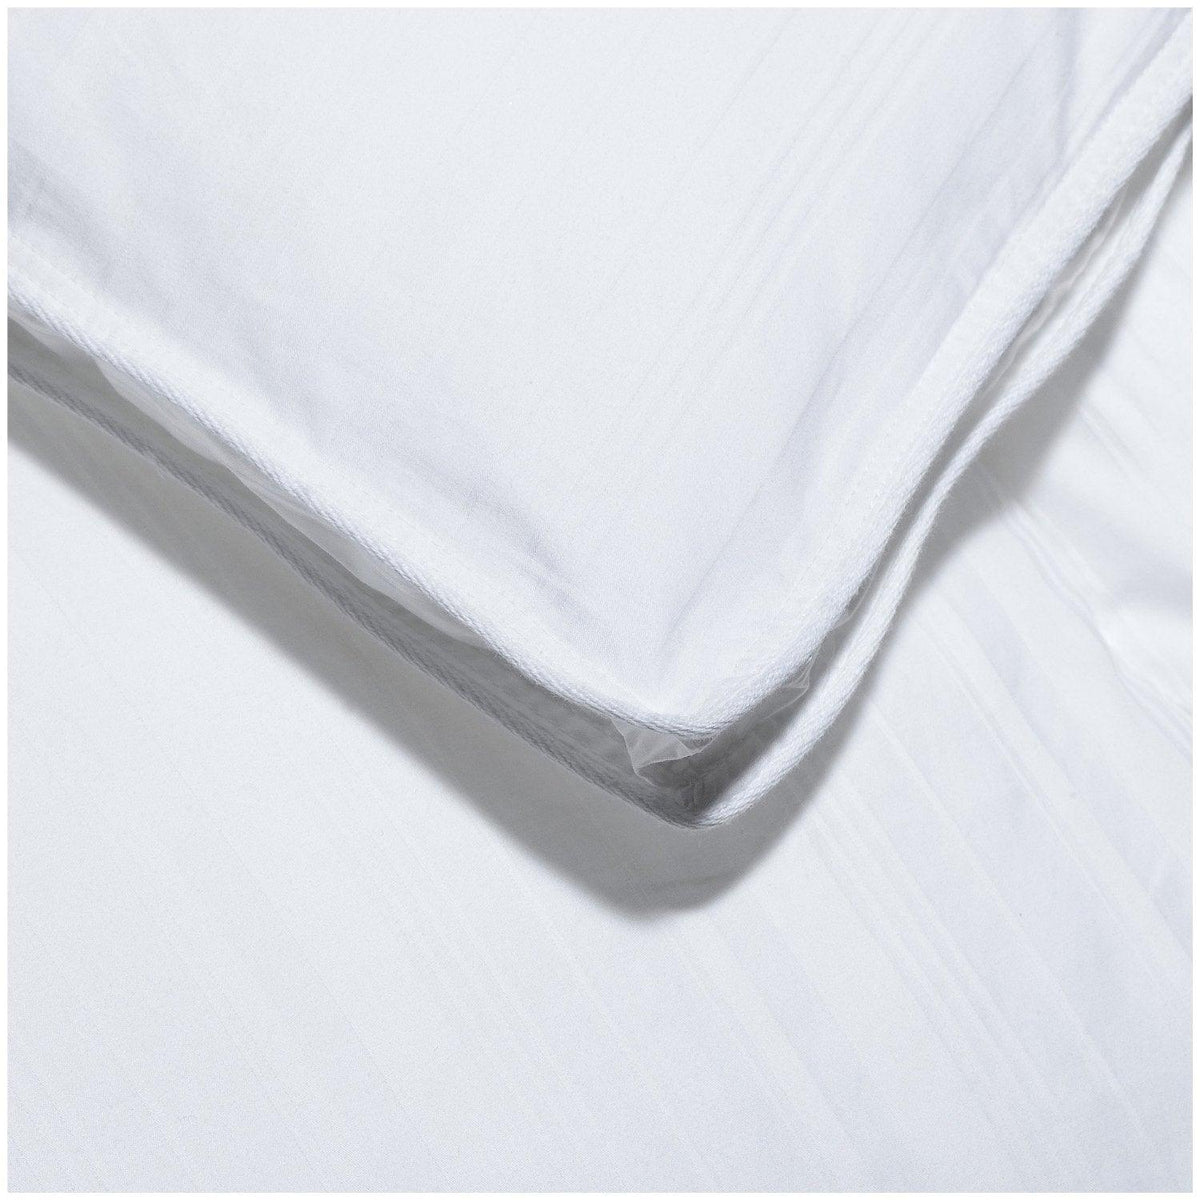 King size 100-Percent Cotton Medium Warmth Down Alternative Comforter - beddingbag.com